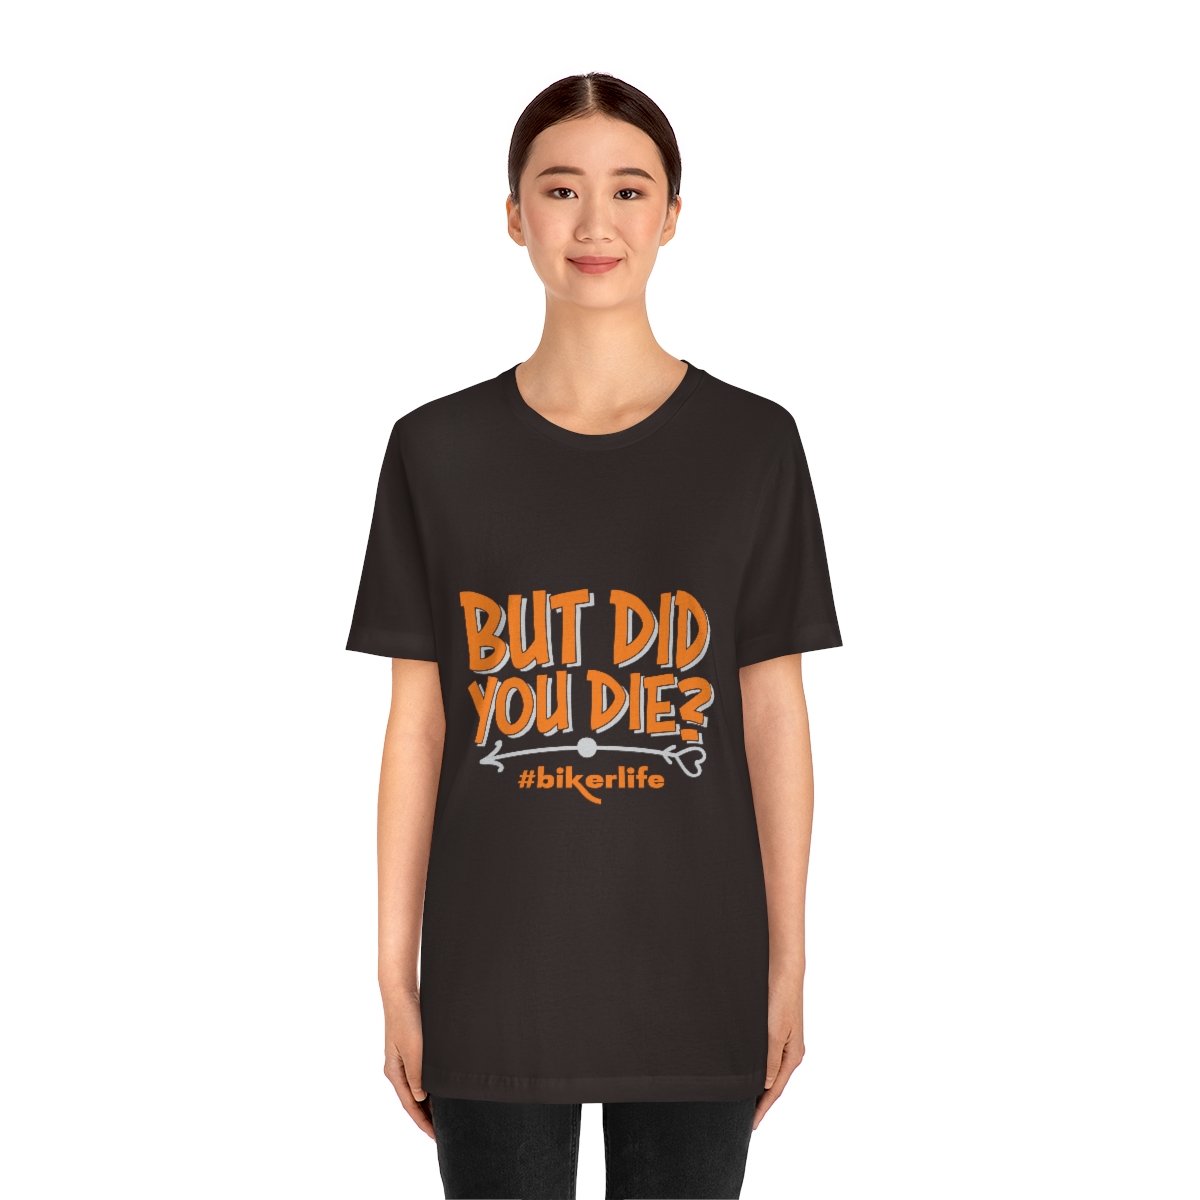 But Did You Die? #BikerLife - Unisex - Jersey Short Sleeve Tee - Dark Colors - T-Shirt